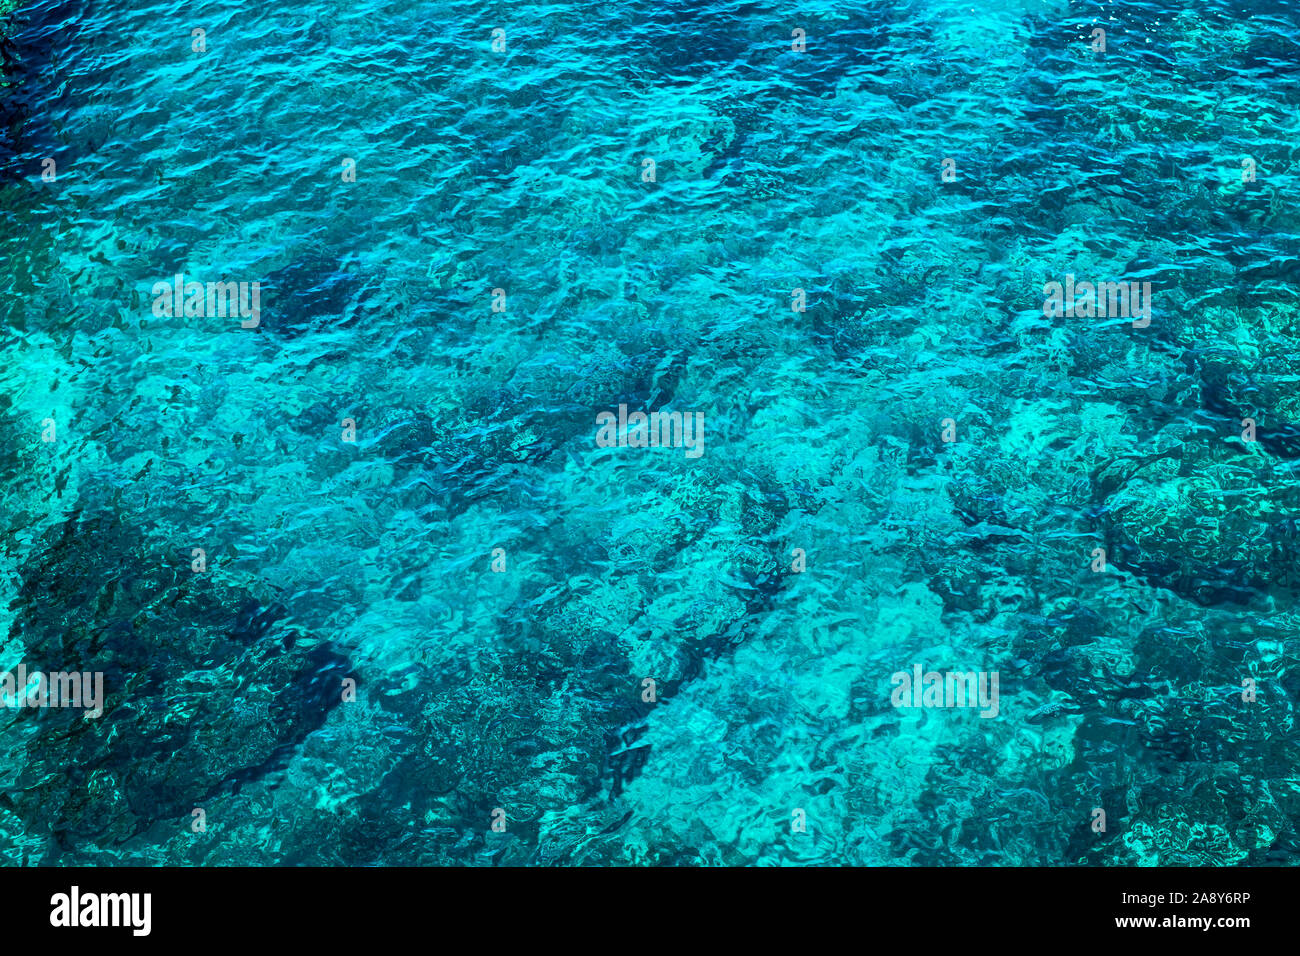 Seething Mediterranean Sea Water Stock Photo - Image of cruise, green:  181023402